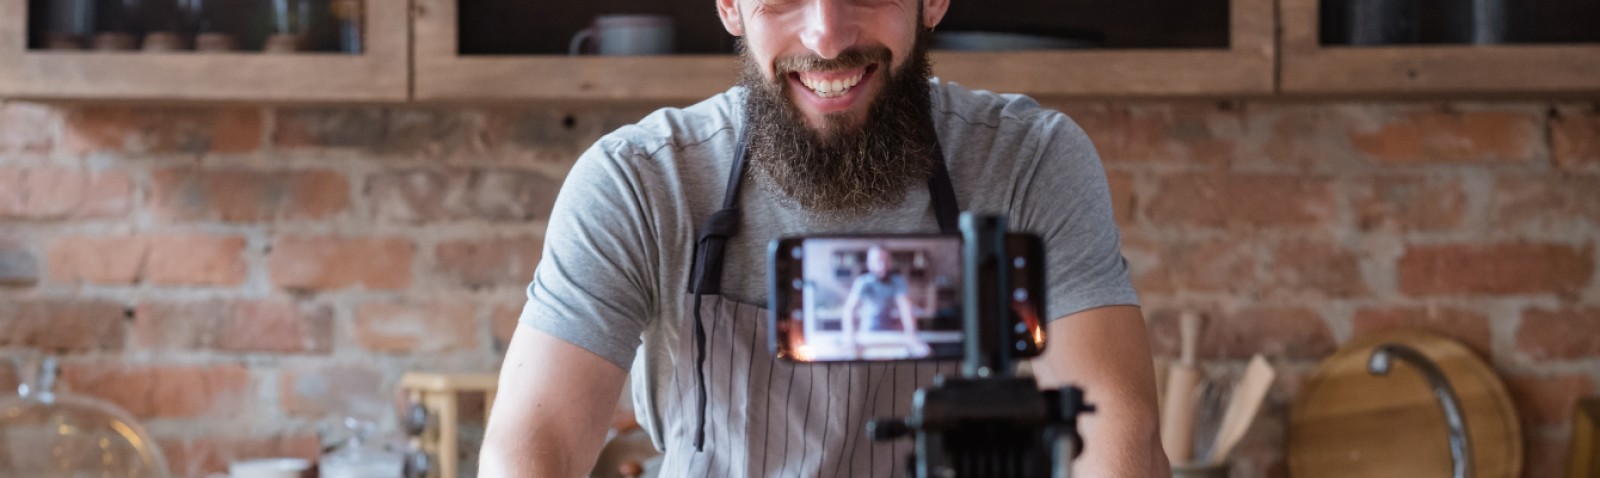 livestreaming chef